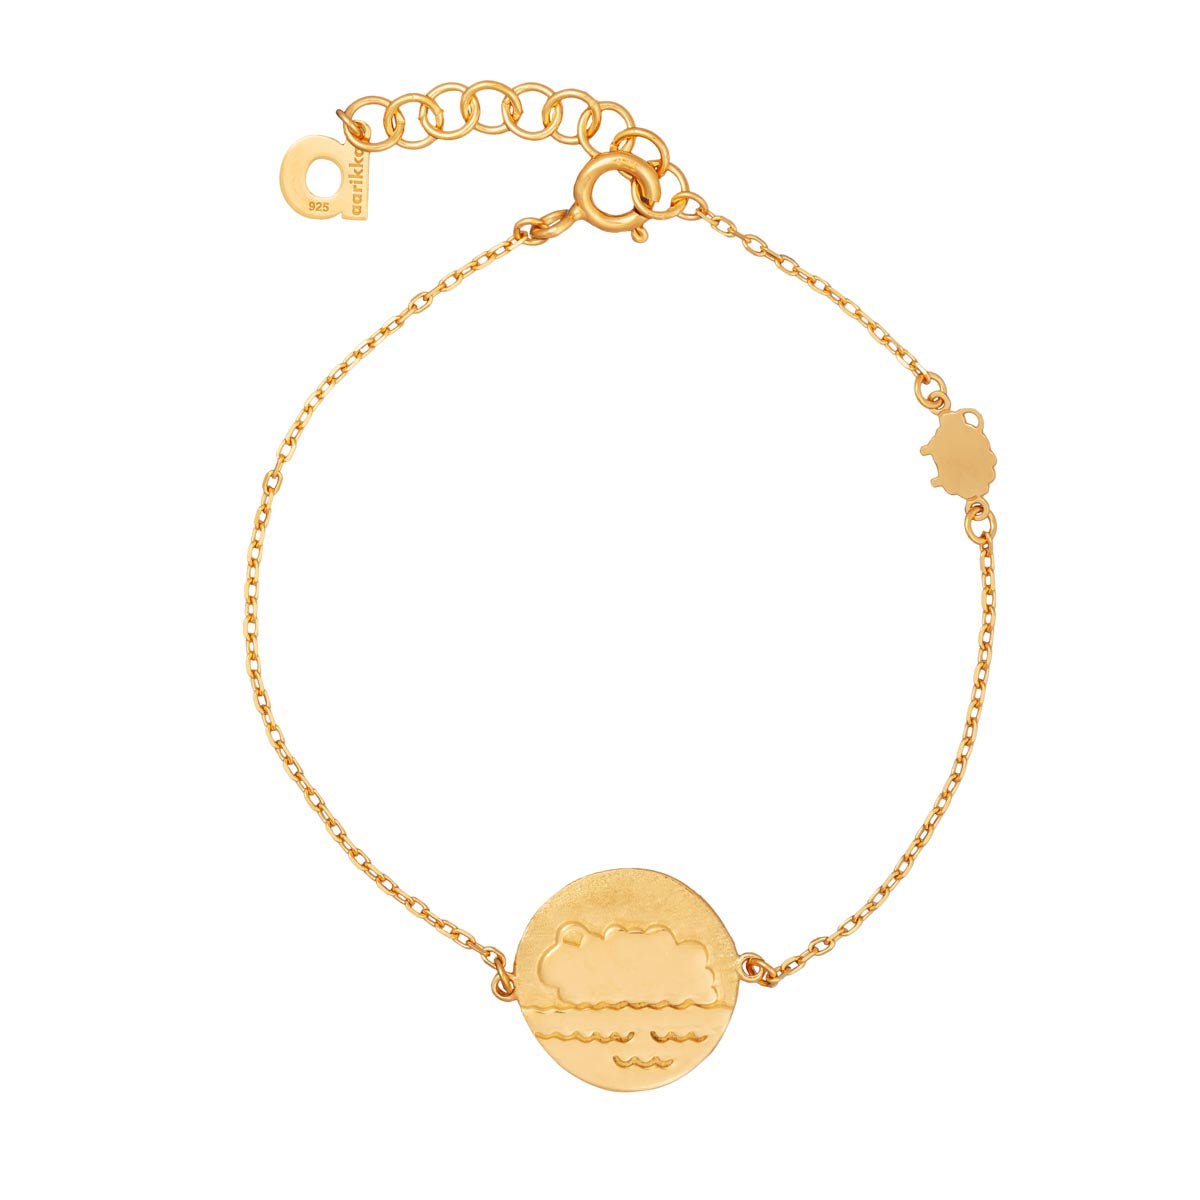 Aquarius bracelet, gold-plated silver